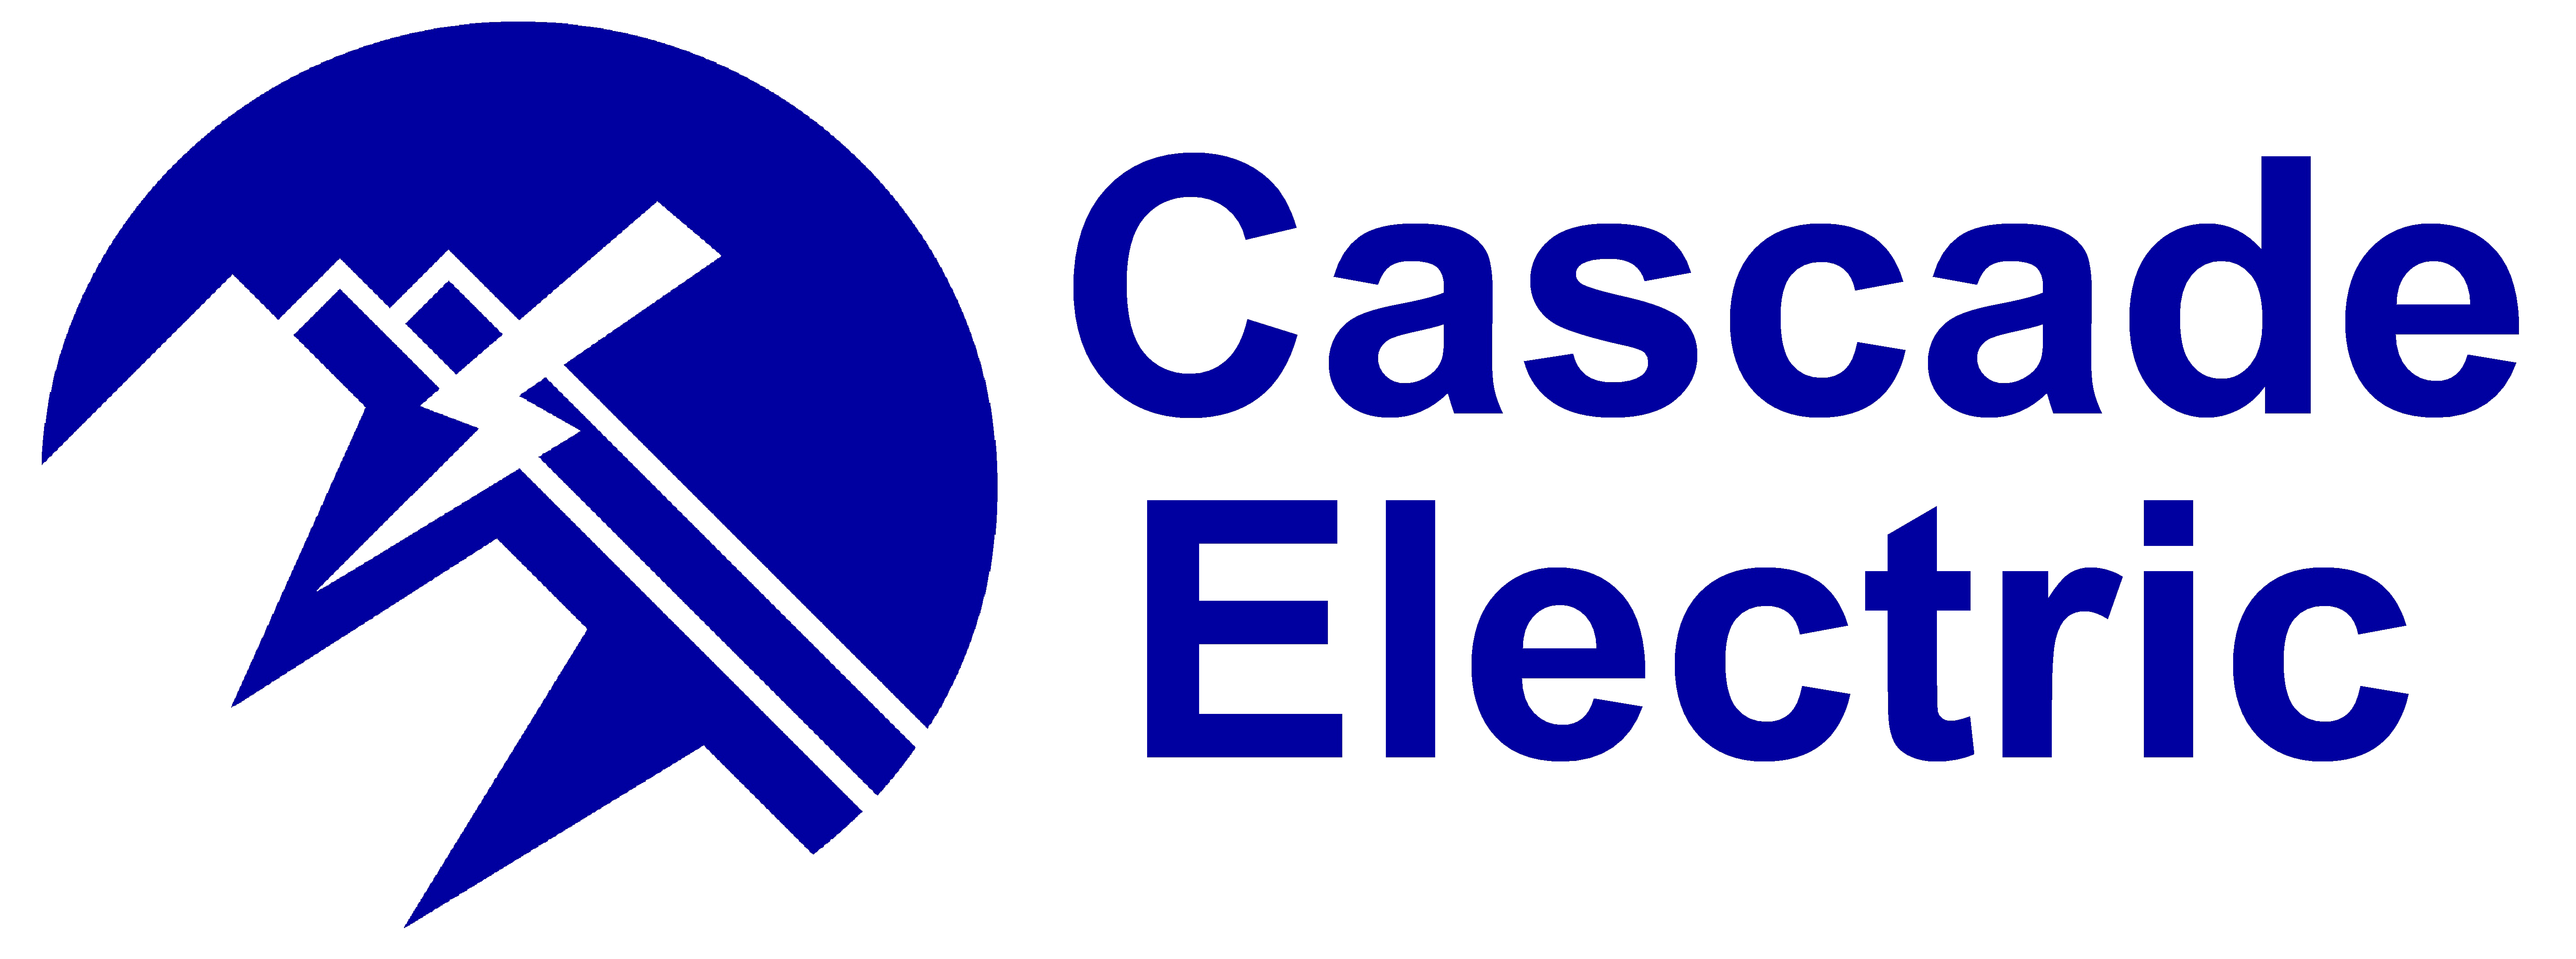 Cascade Electric logo of a lightning bolt over 3 blue mountains